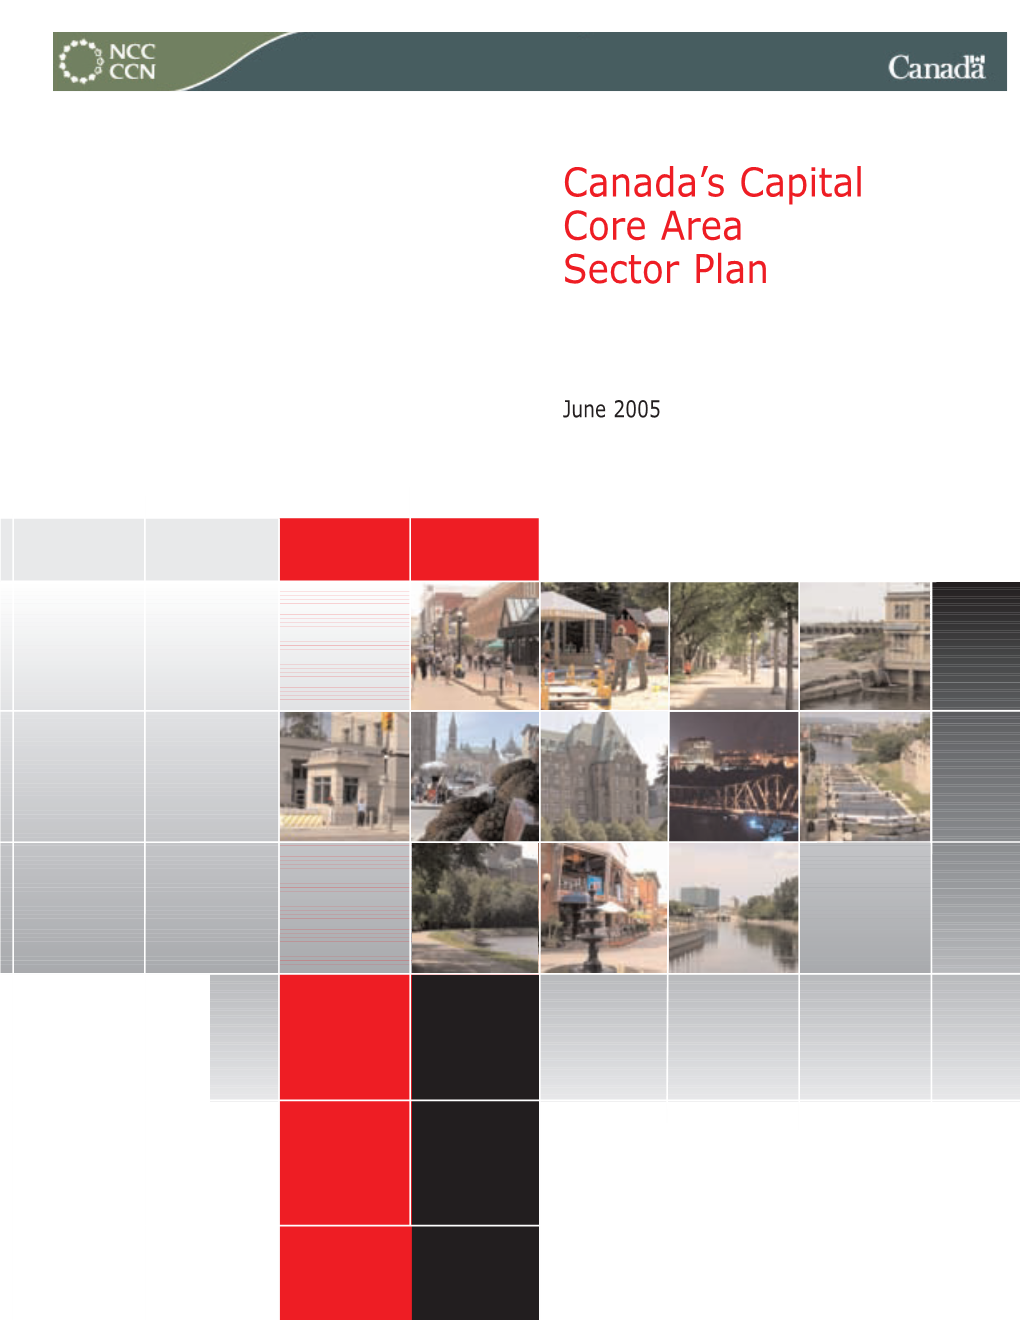 Canada's Capital Core Area Sector Plan